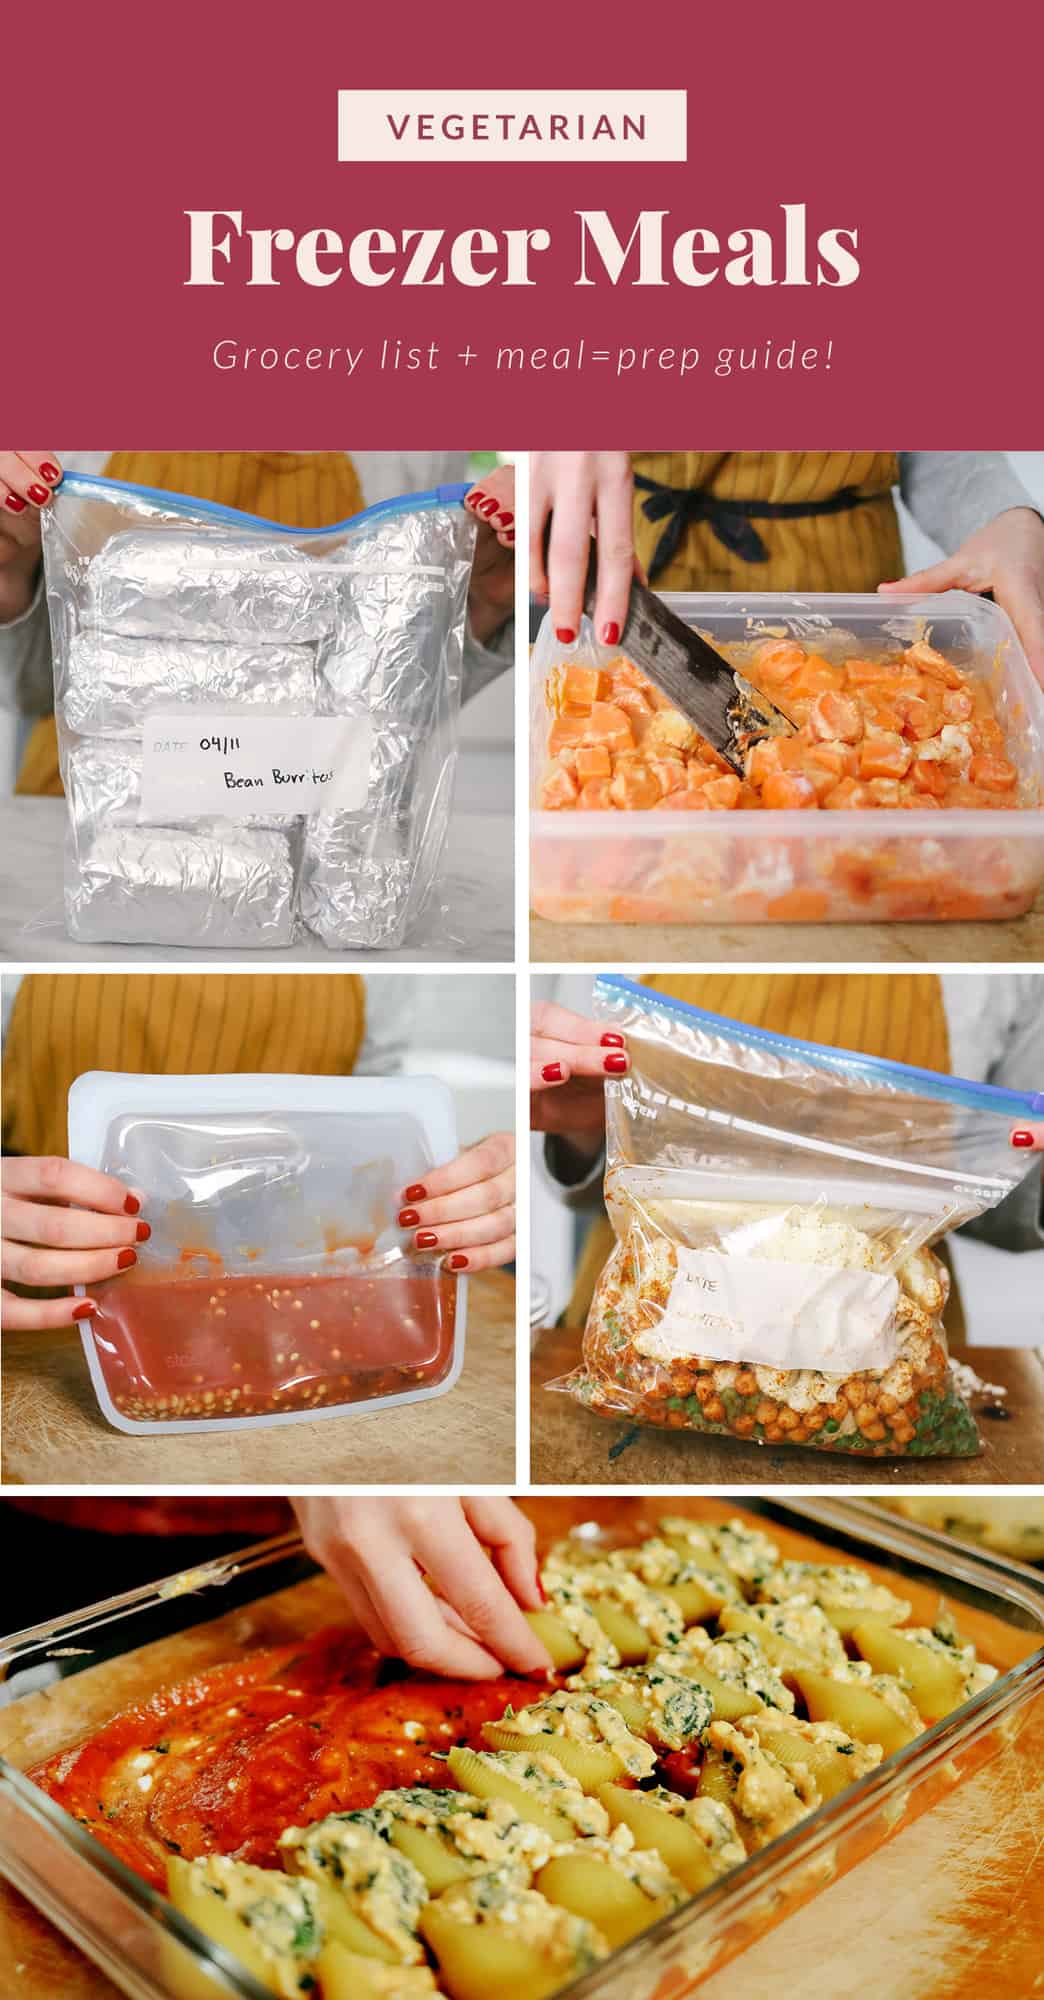 How to make vegetarian freezer meals.